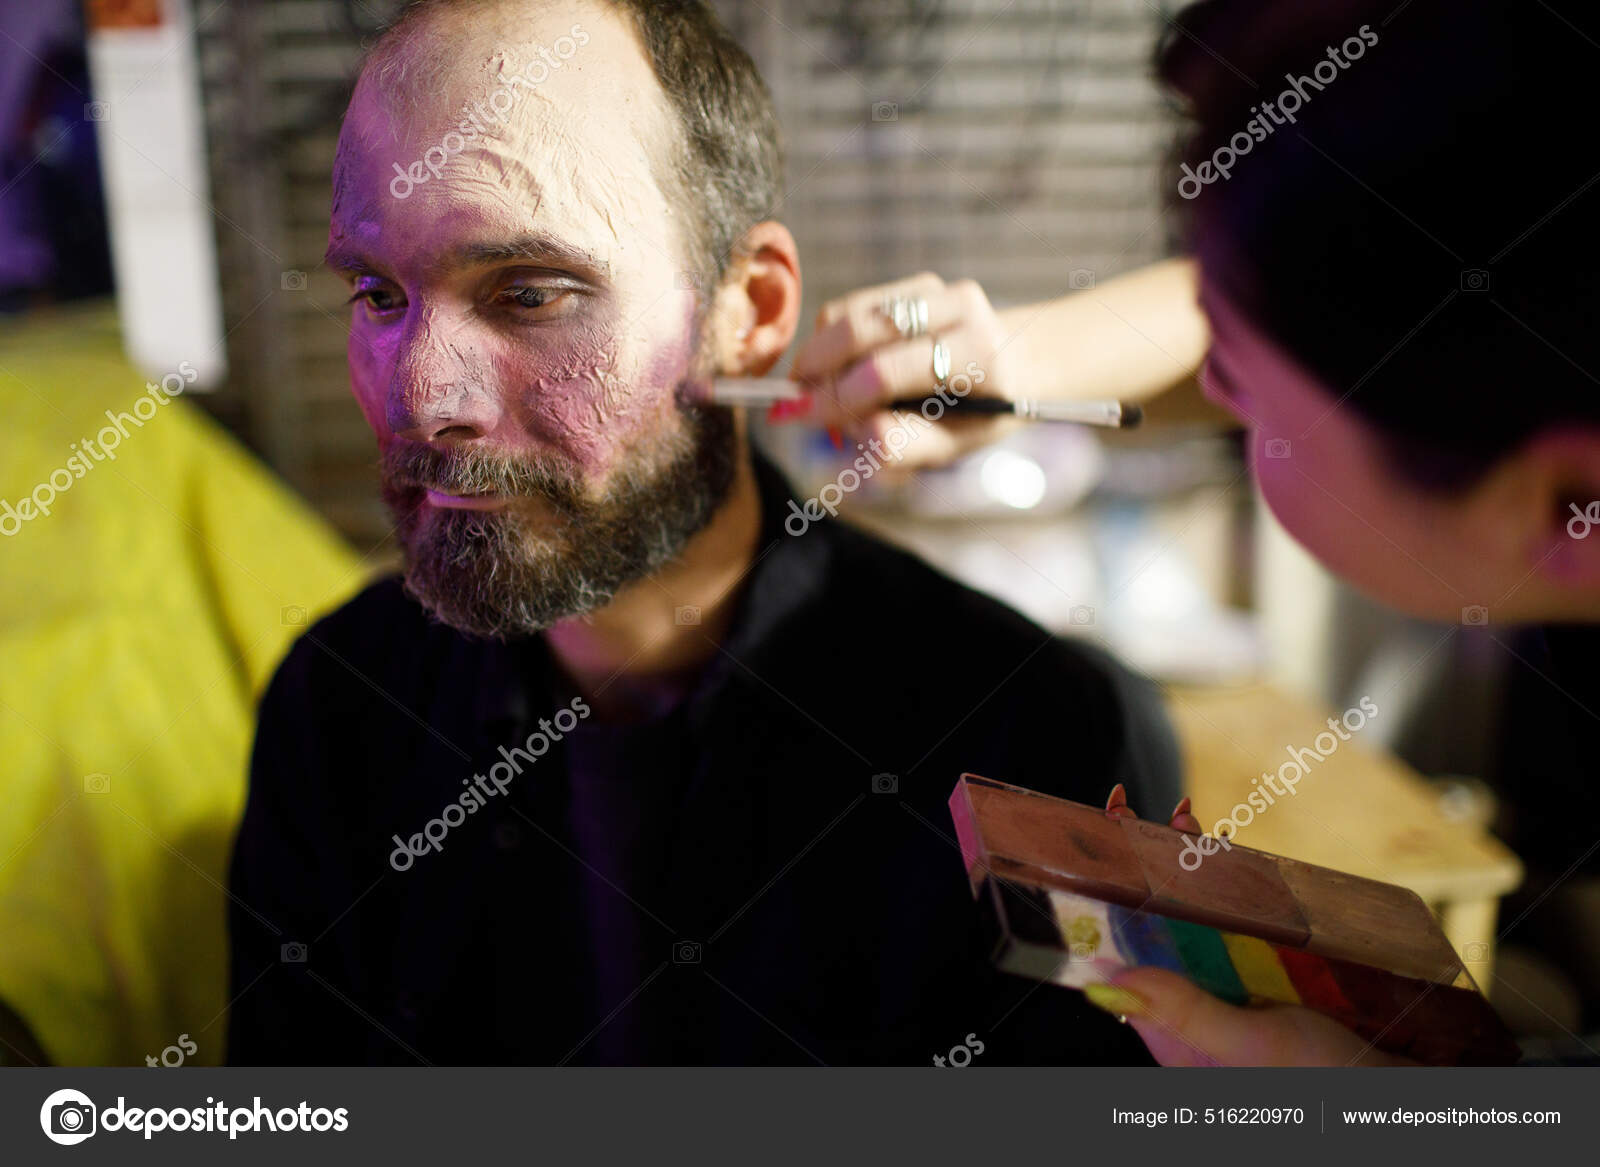 Maquiagem masculina zumbi para o conceito de halloween. sangue na